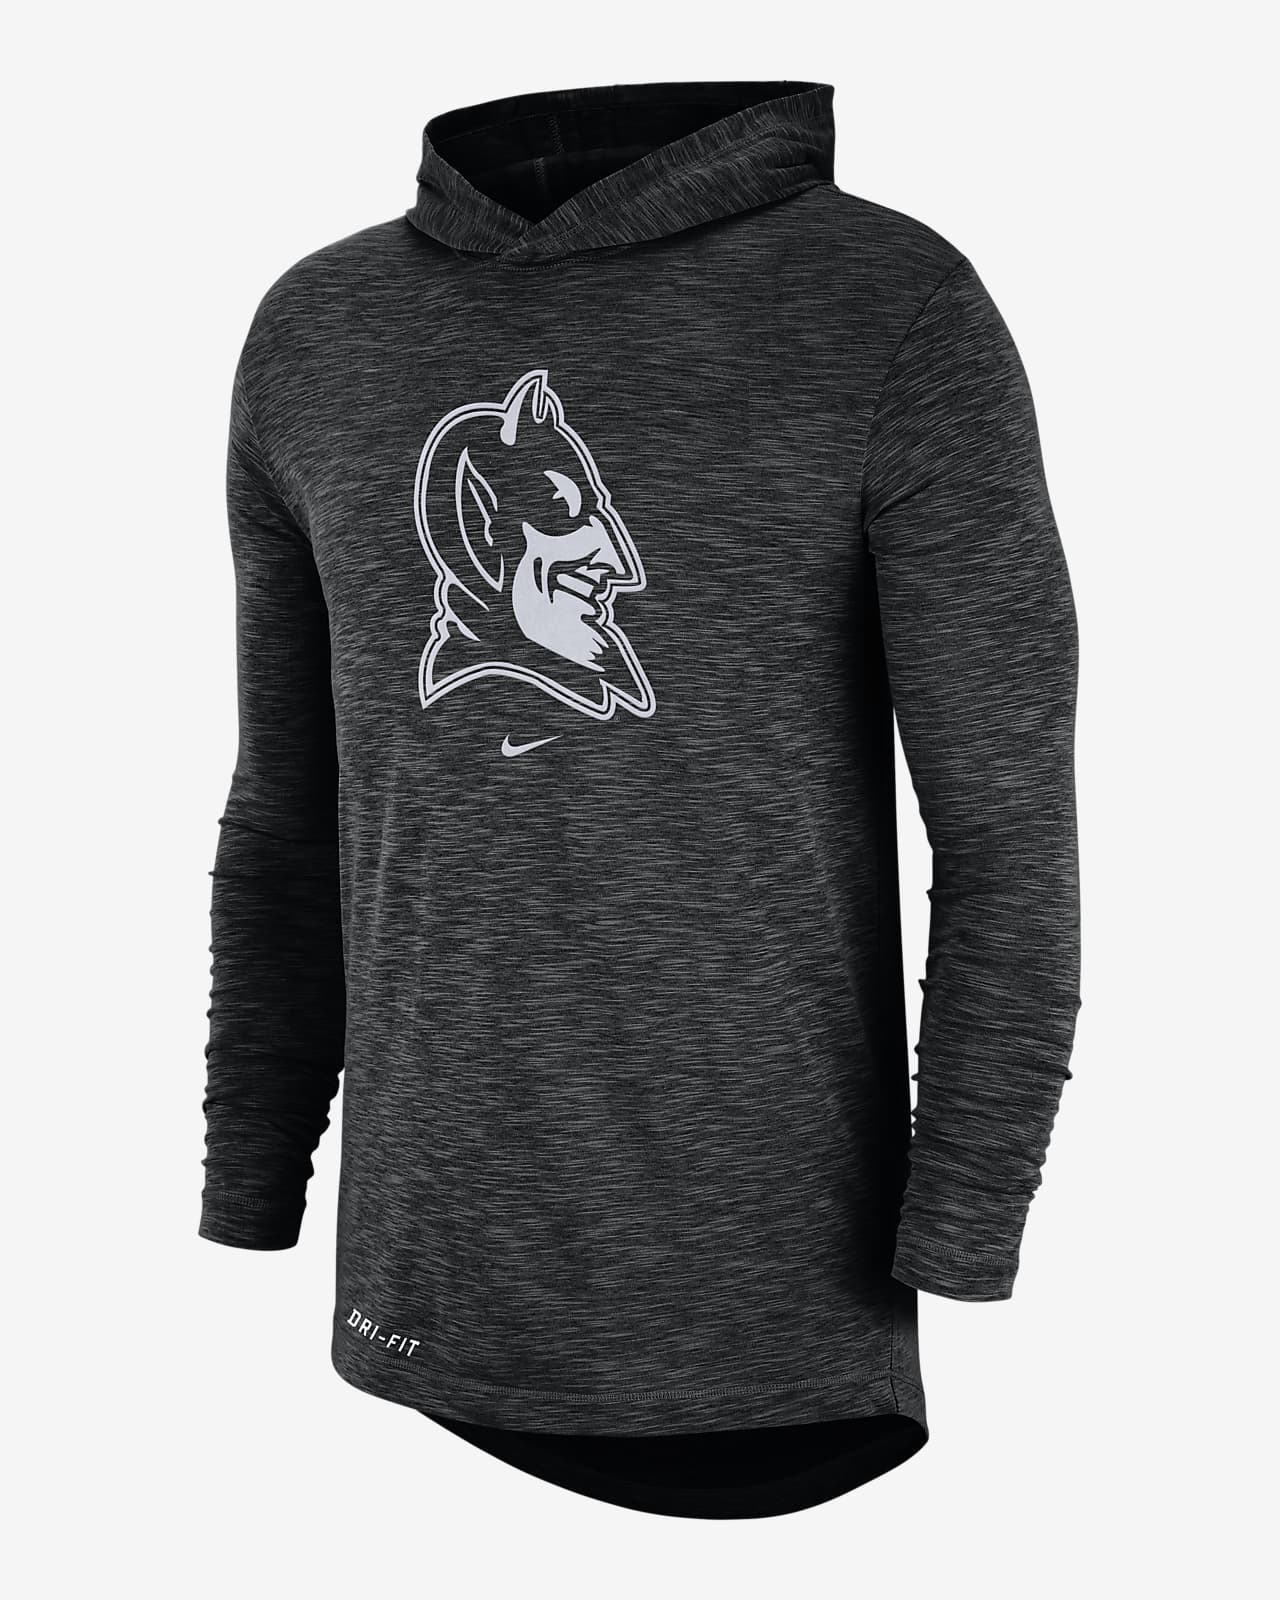 Men's Long-Sleeve Hooded T-Shirt. Nike.com